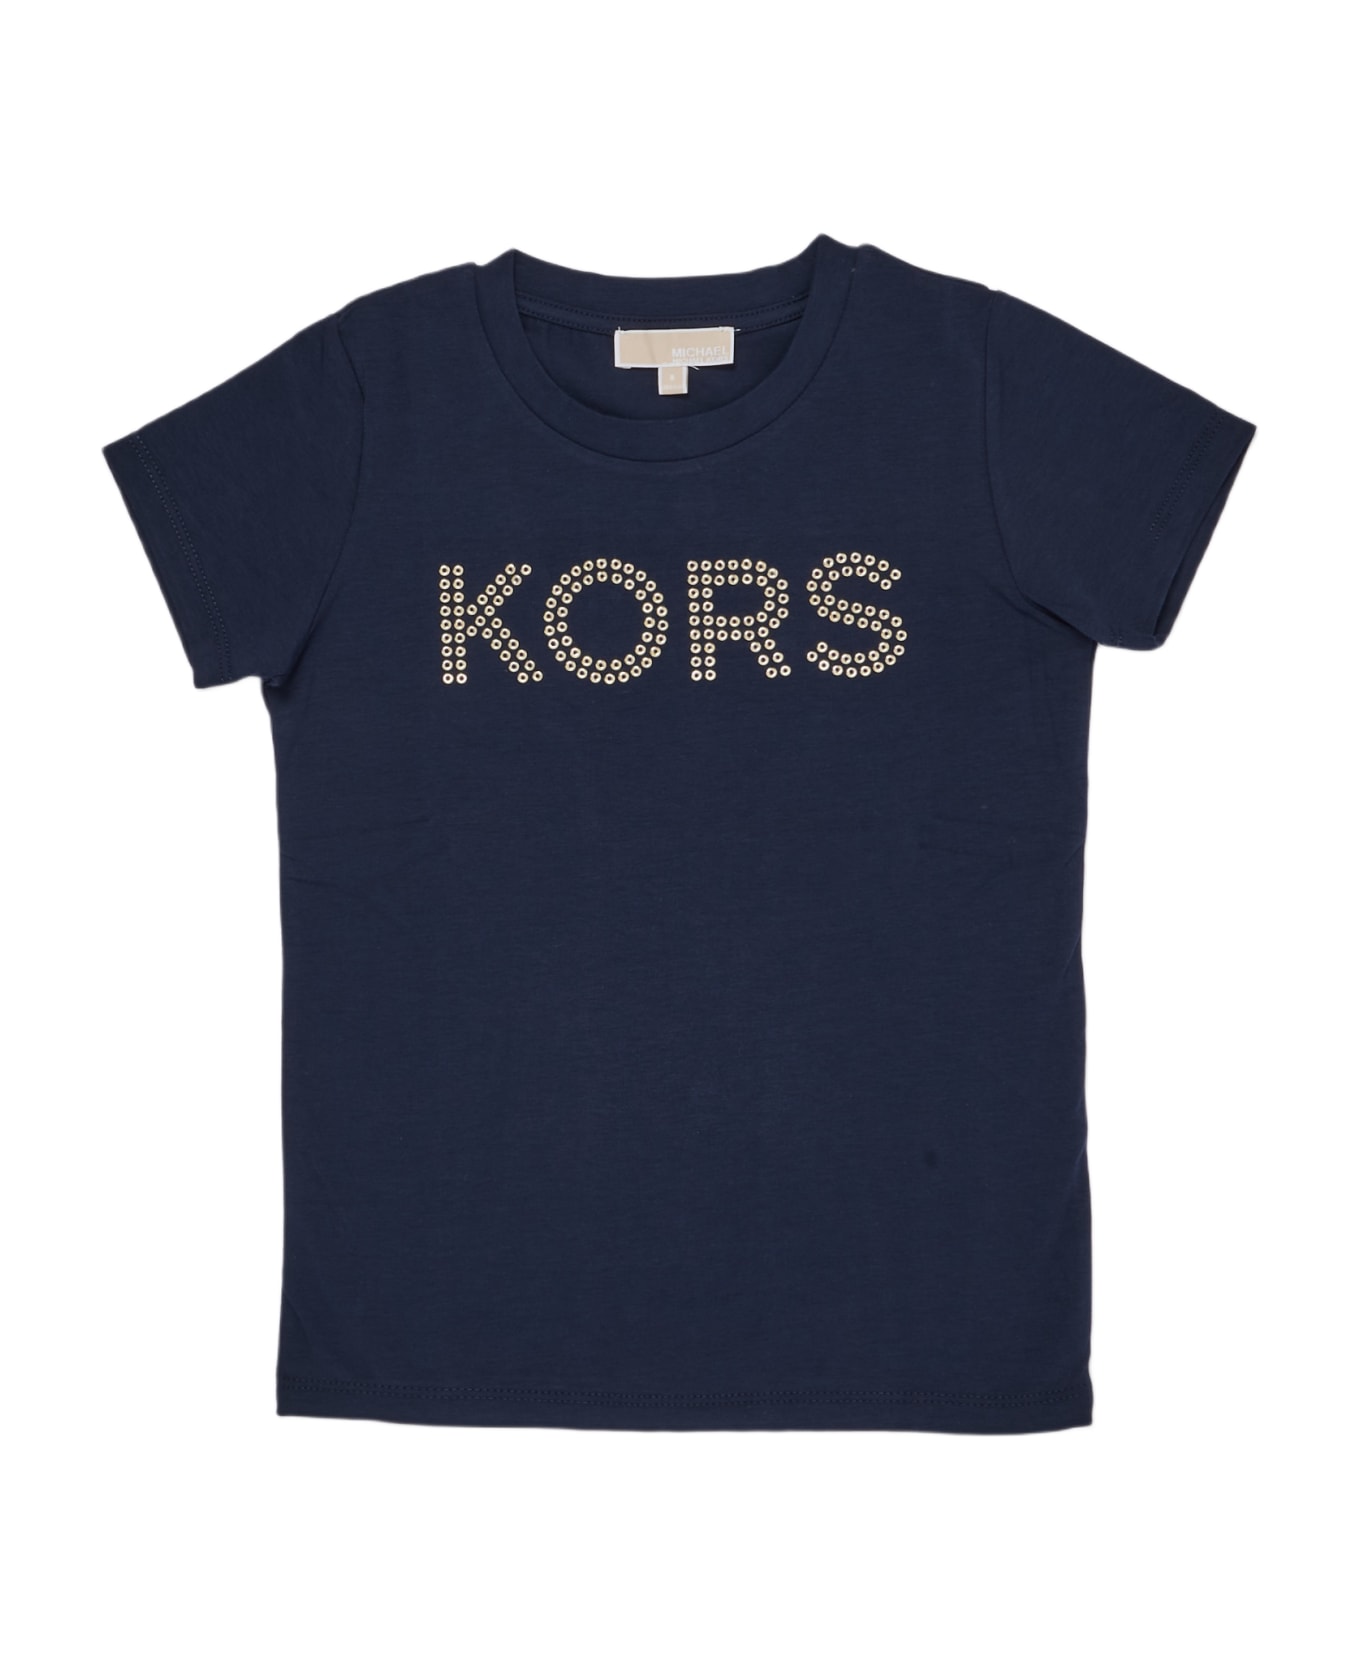 Michael Kors T-shirt T-shirt - MARINE